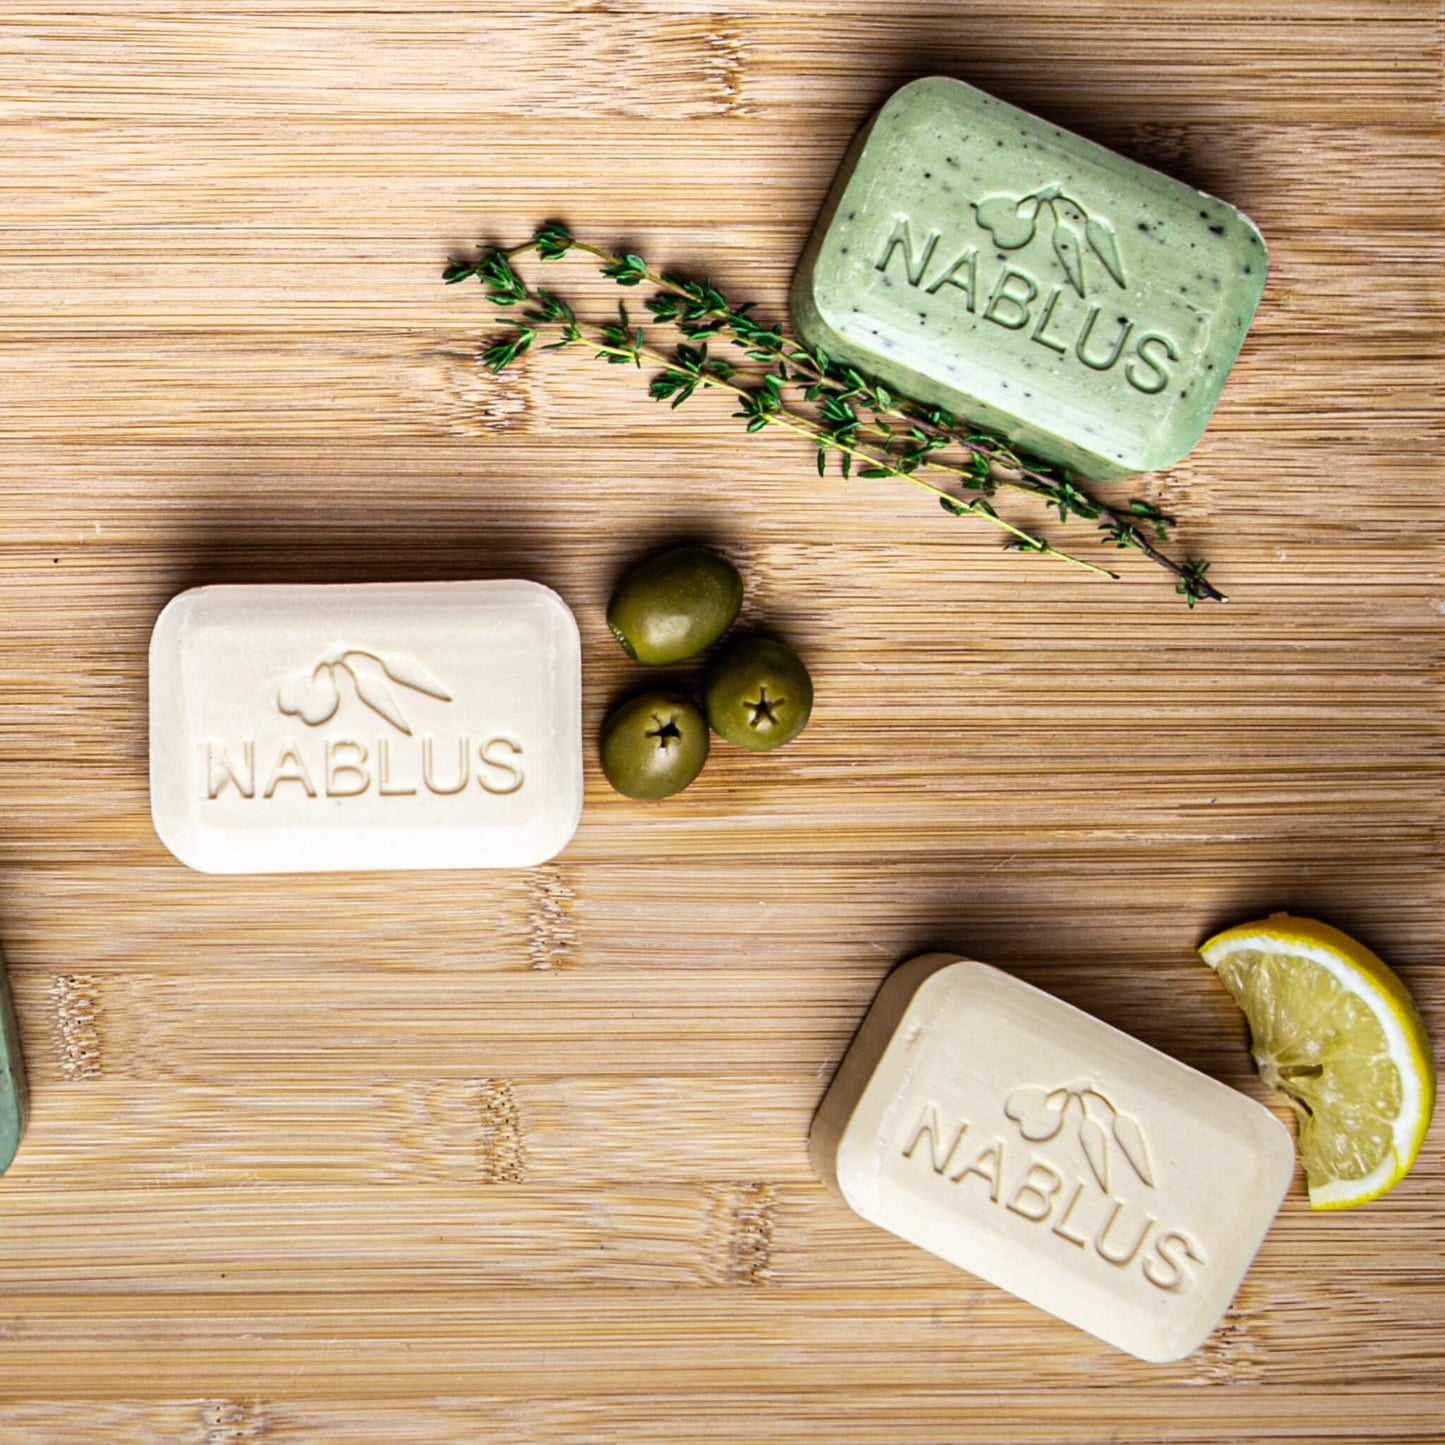 Nablus olive oil soap bars